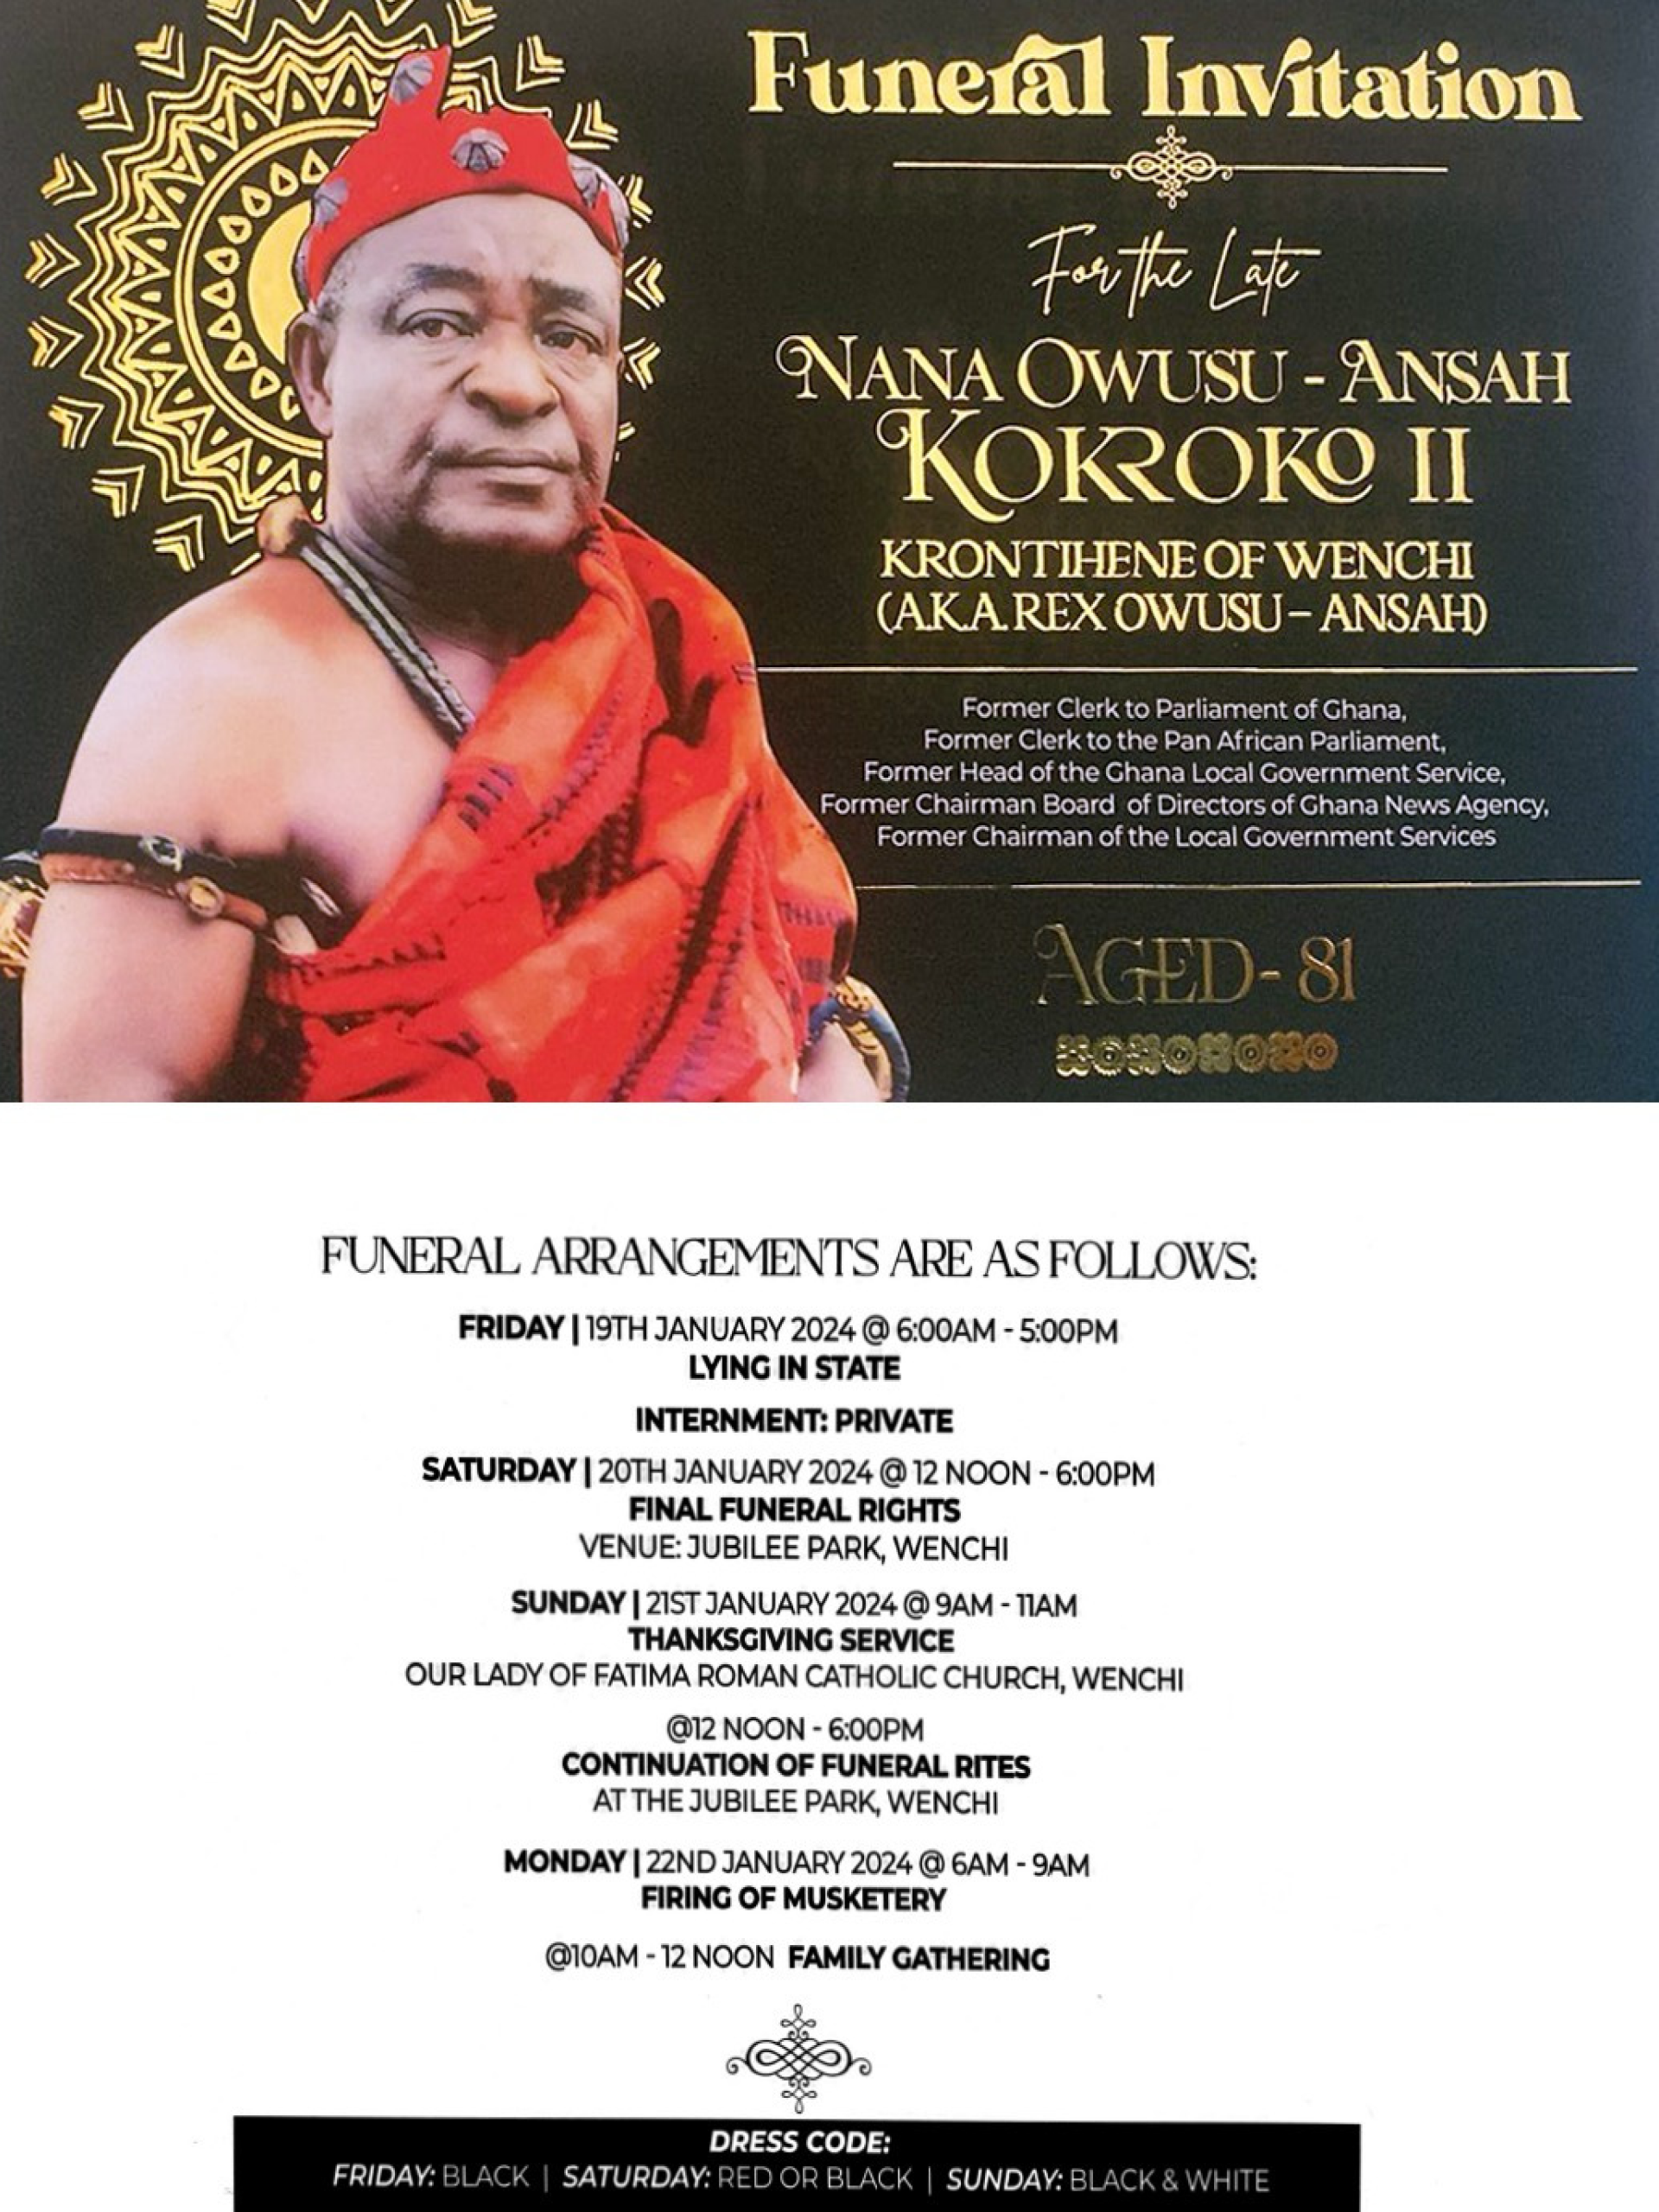 Nana Owusu – Ansah Kokroko II